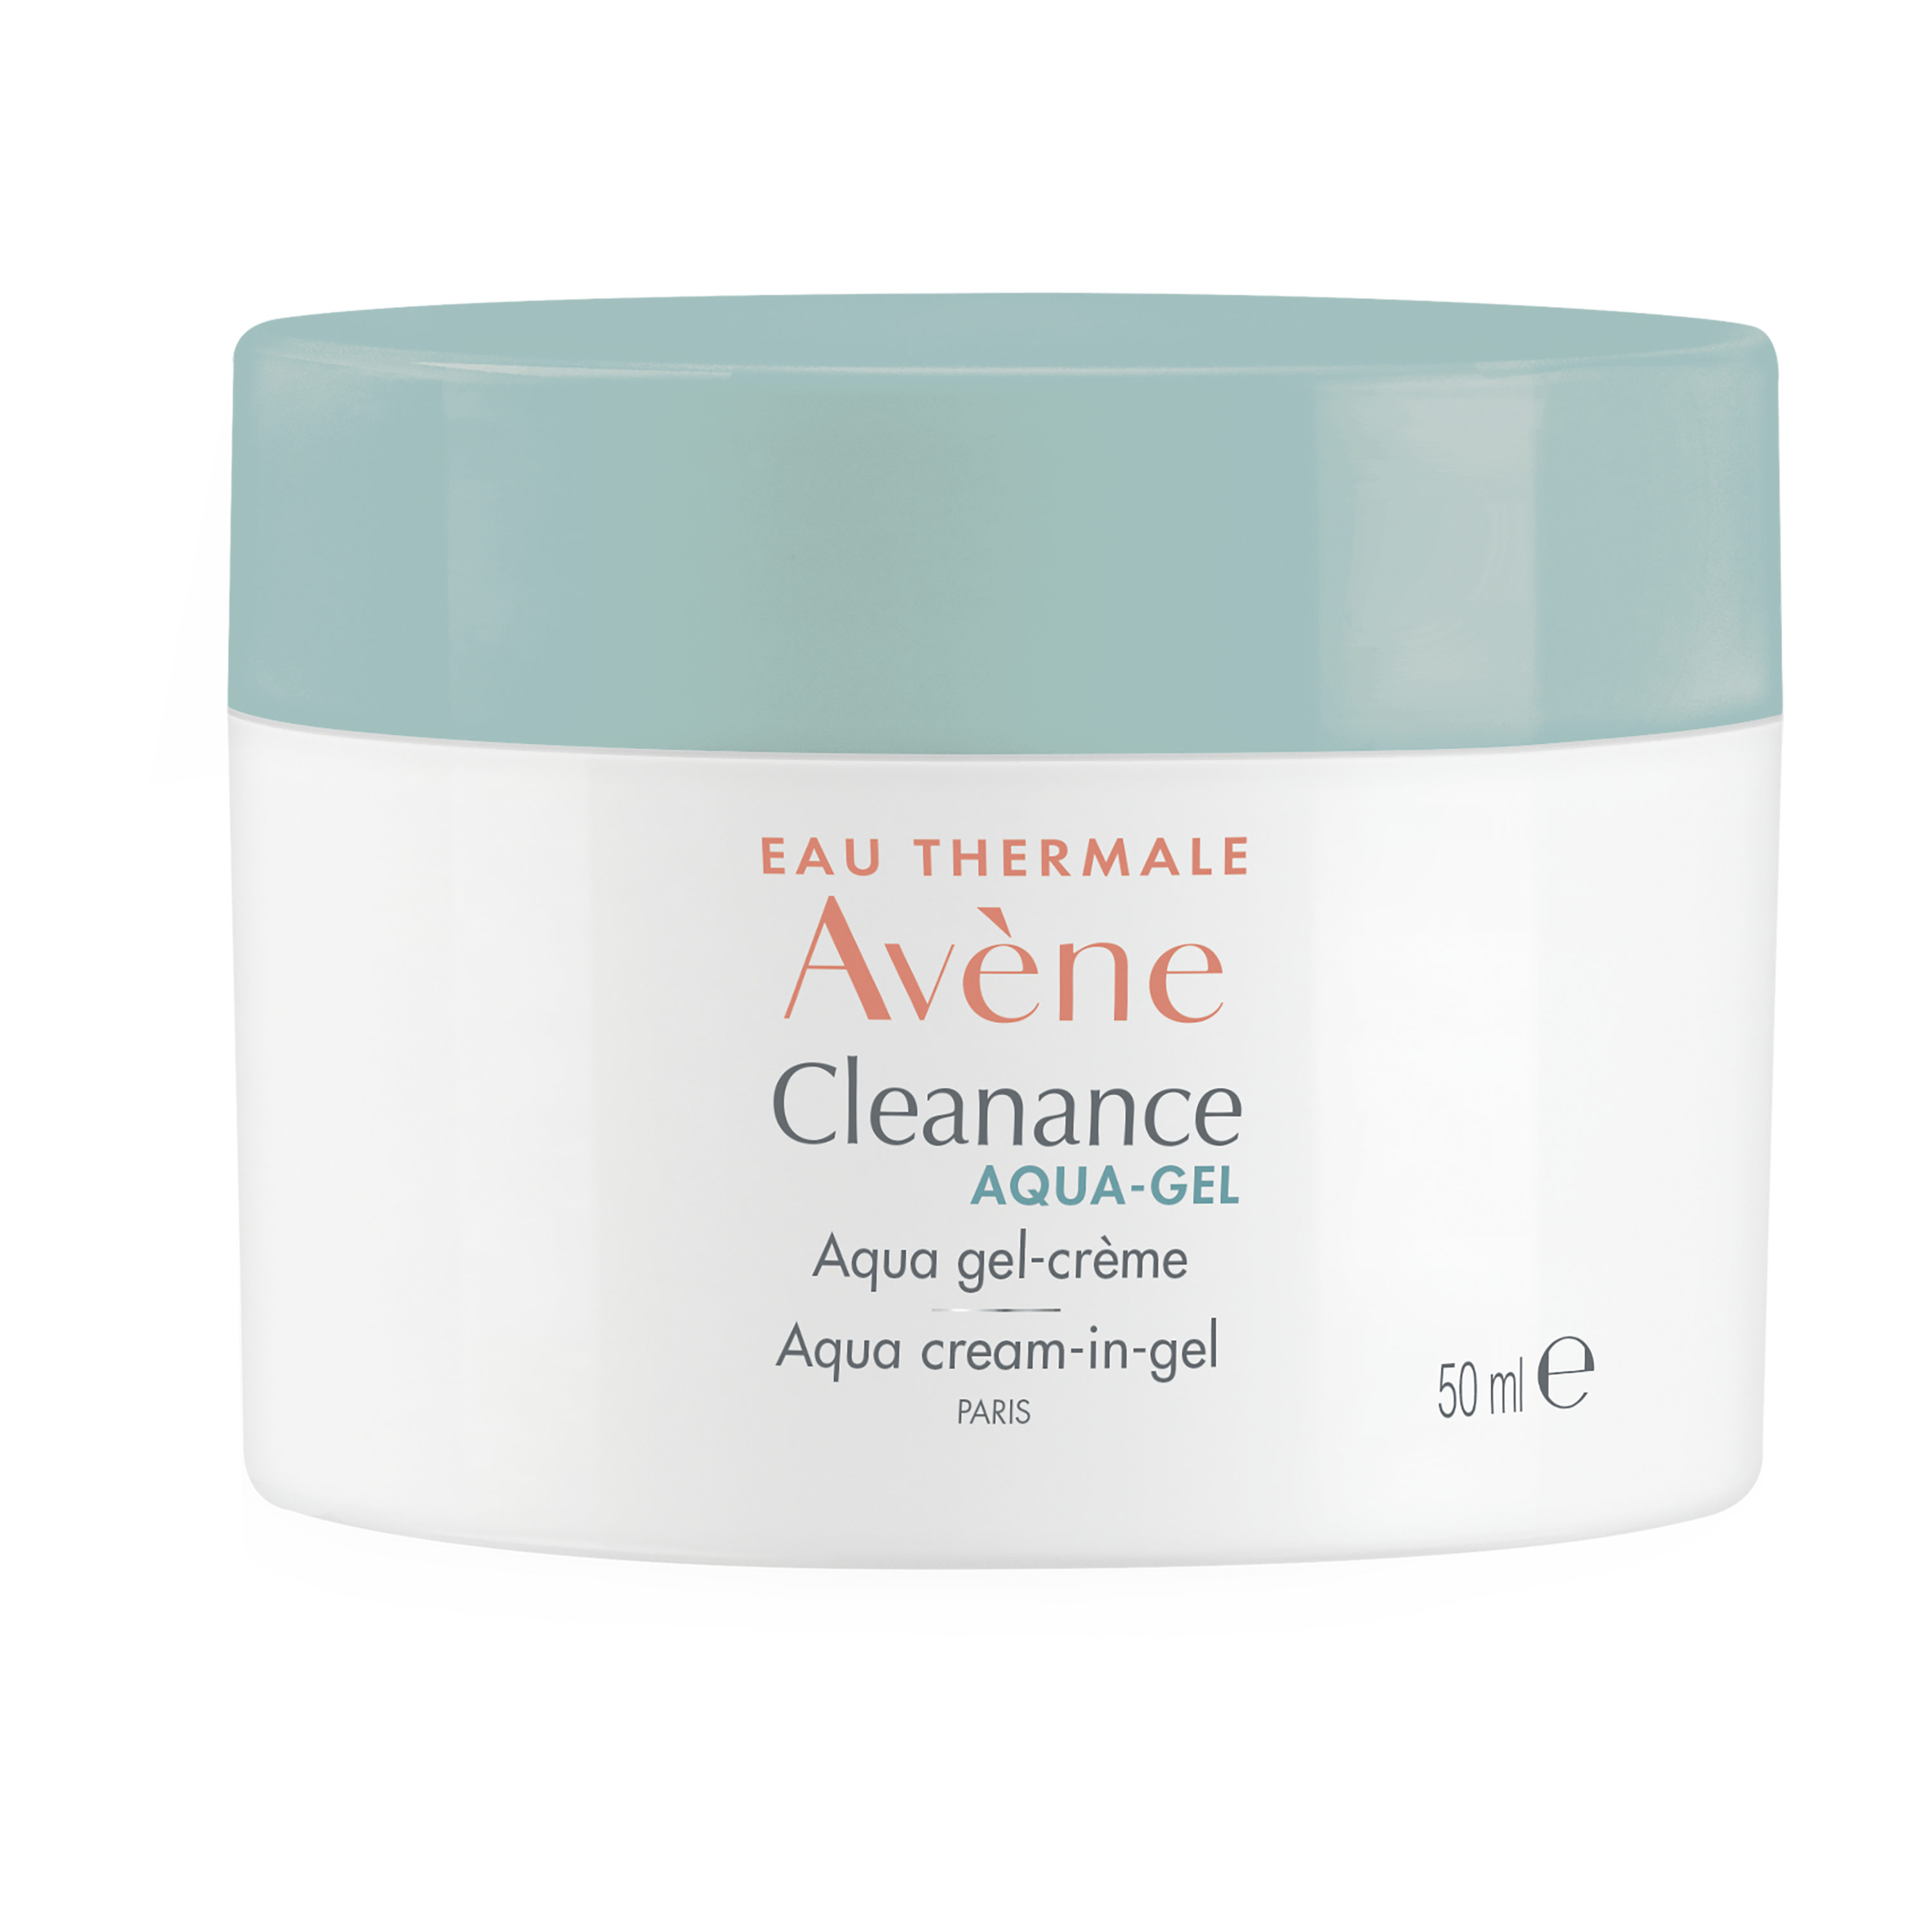 Cleanance AQUA-GEL Aqua gel-cream